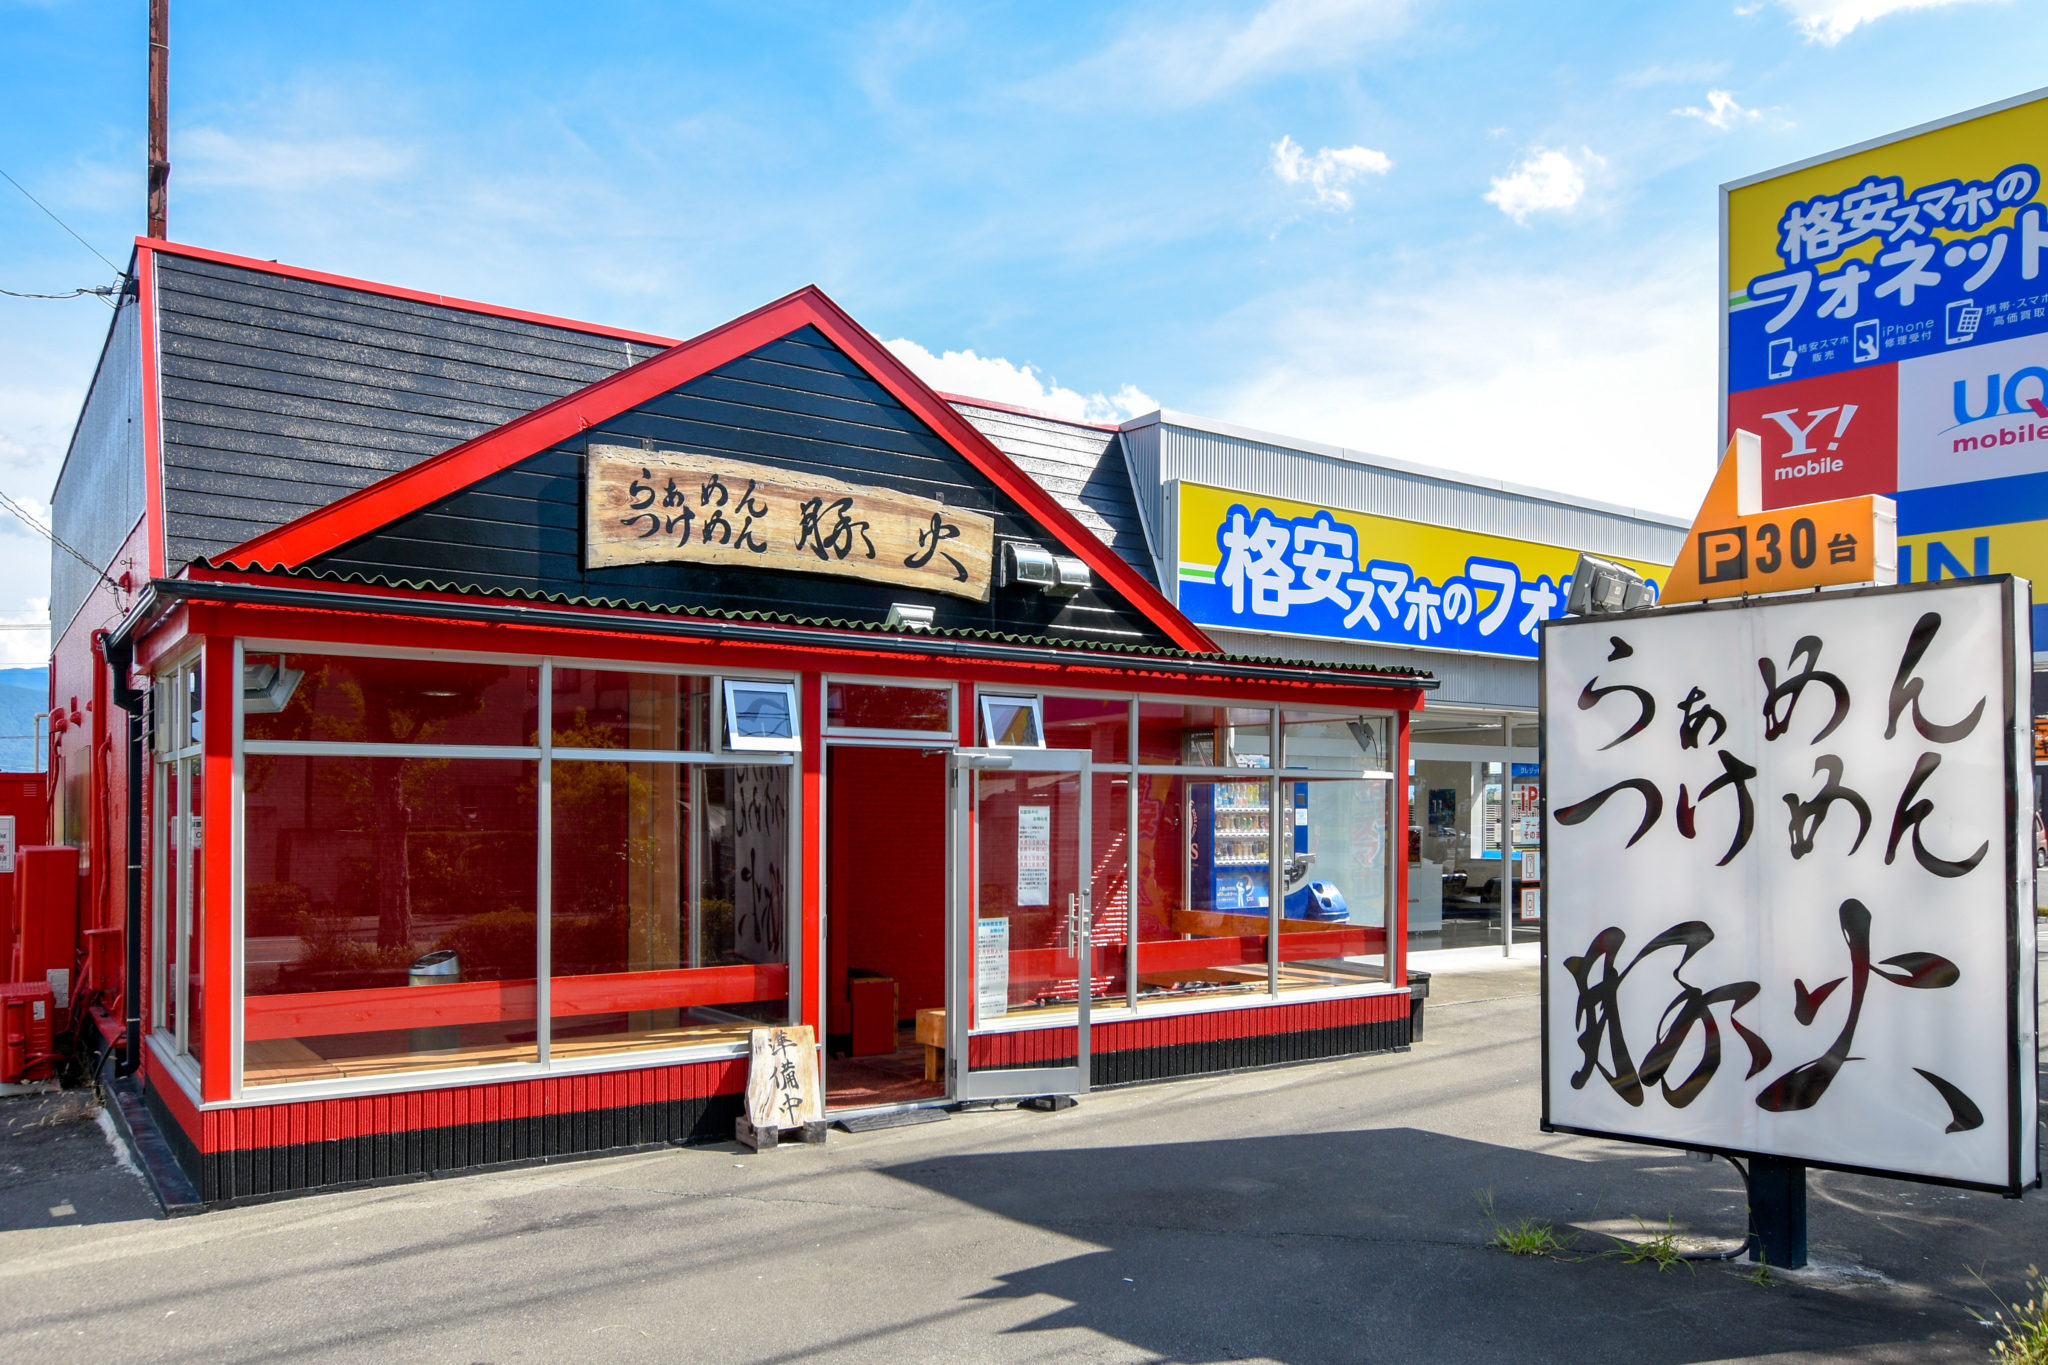 Ramen Tsukemen Pork Fire Main Store Showa Town Gourmet Ramen 5